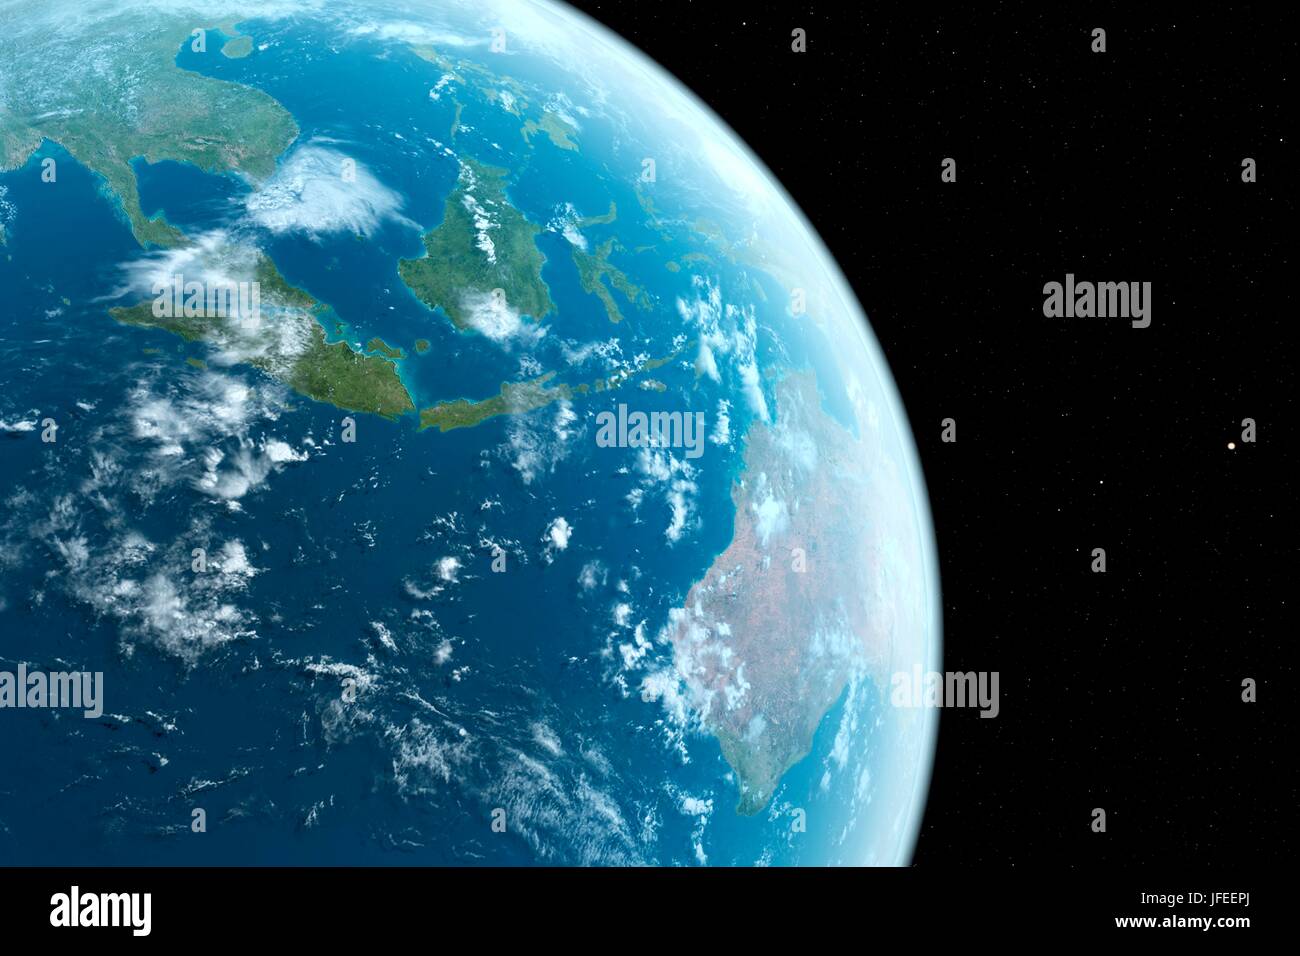 Planet Earth, illustration. Stock Photo